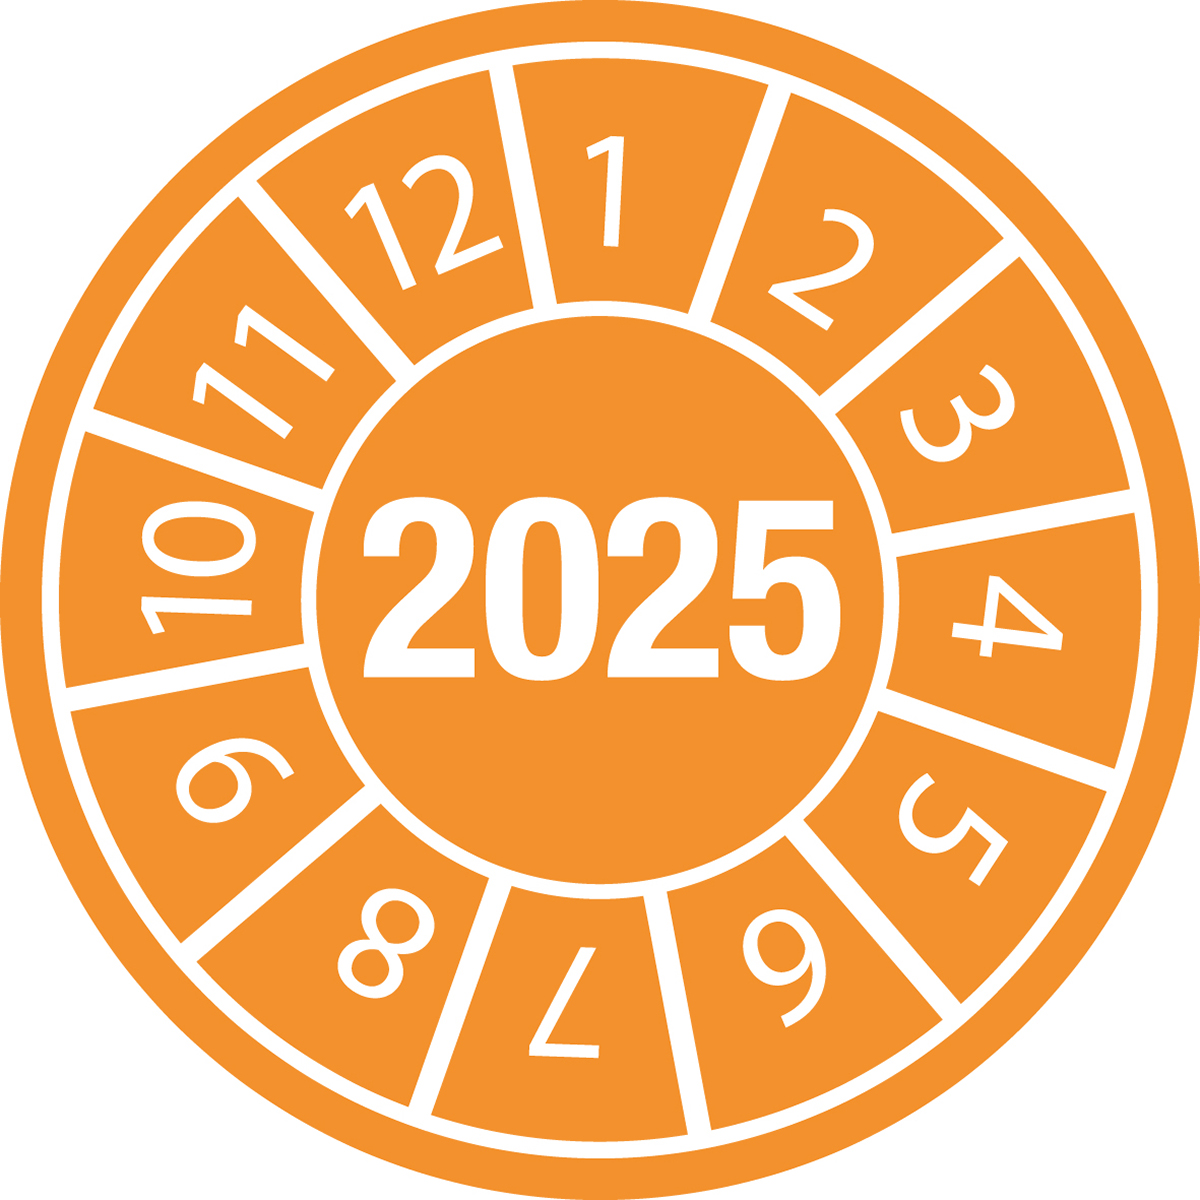 BRADY DATE 2025-DIA 35 B-500 DATE INSPECTION LBLS B-500 2025 - DIA 35 834111